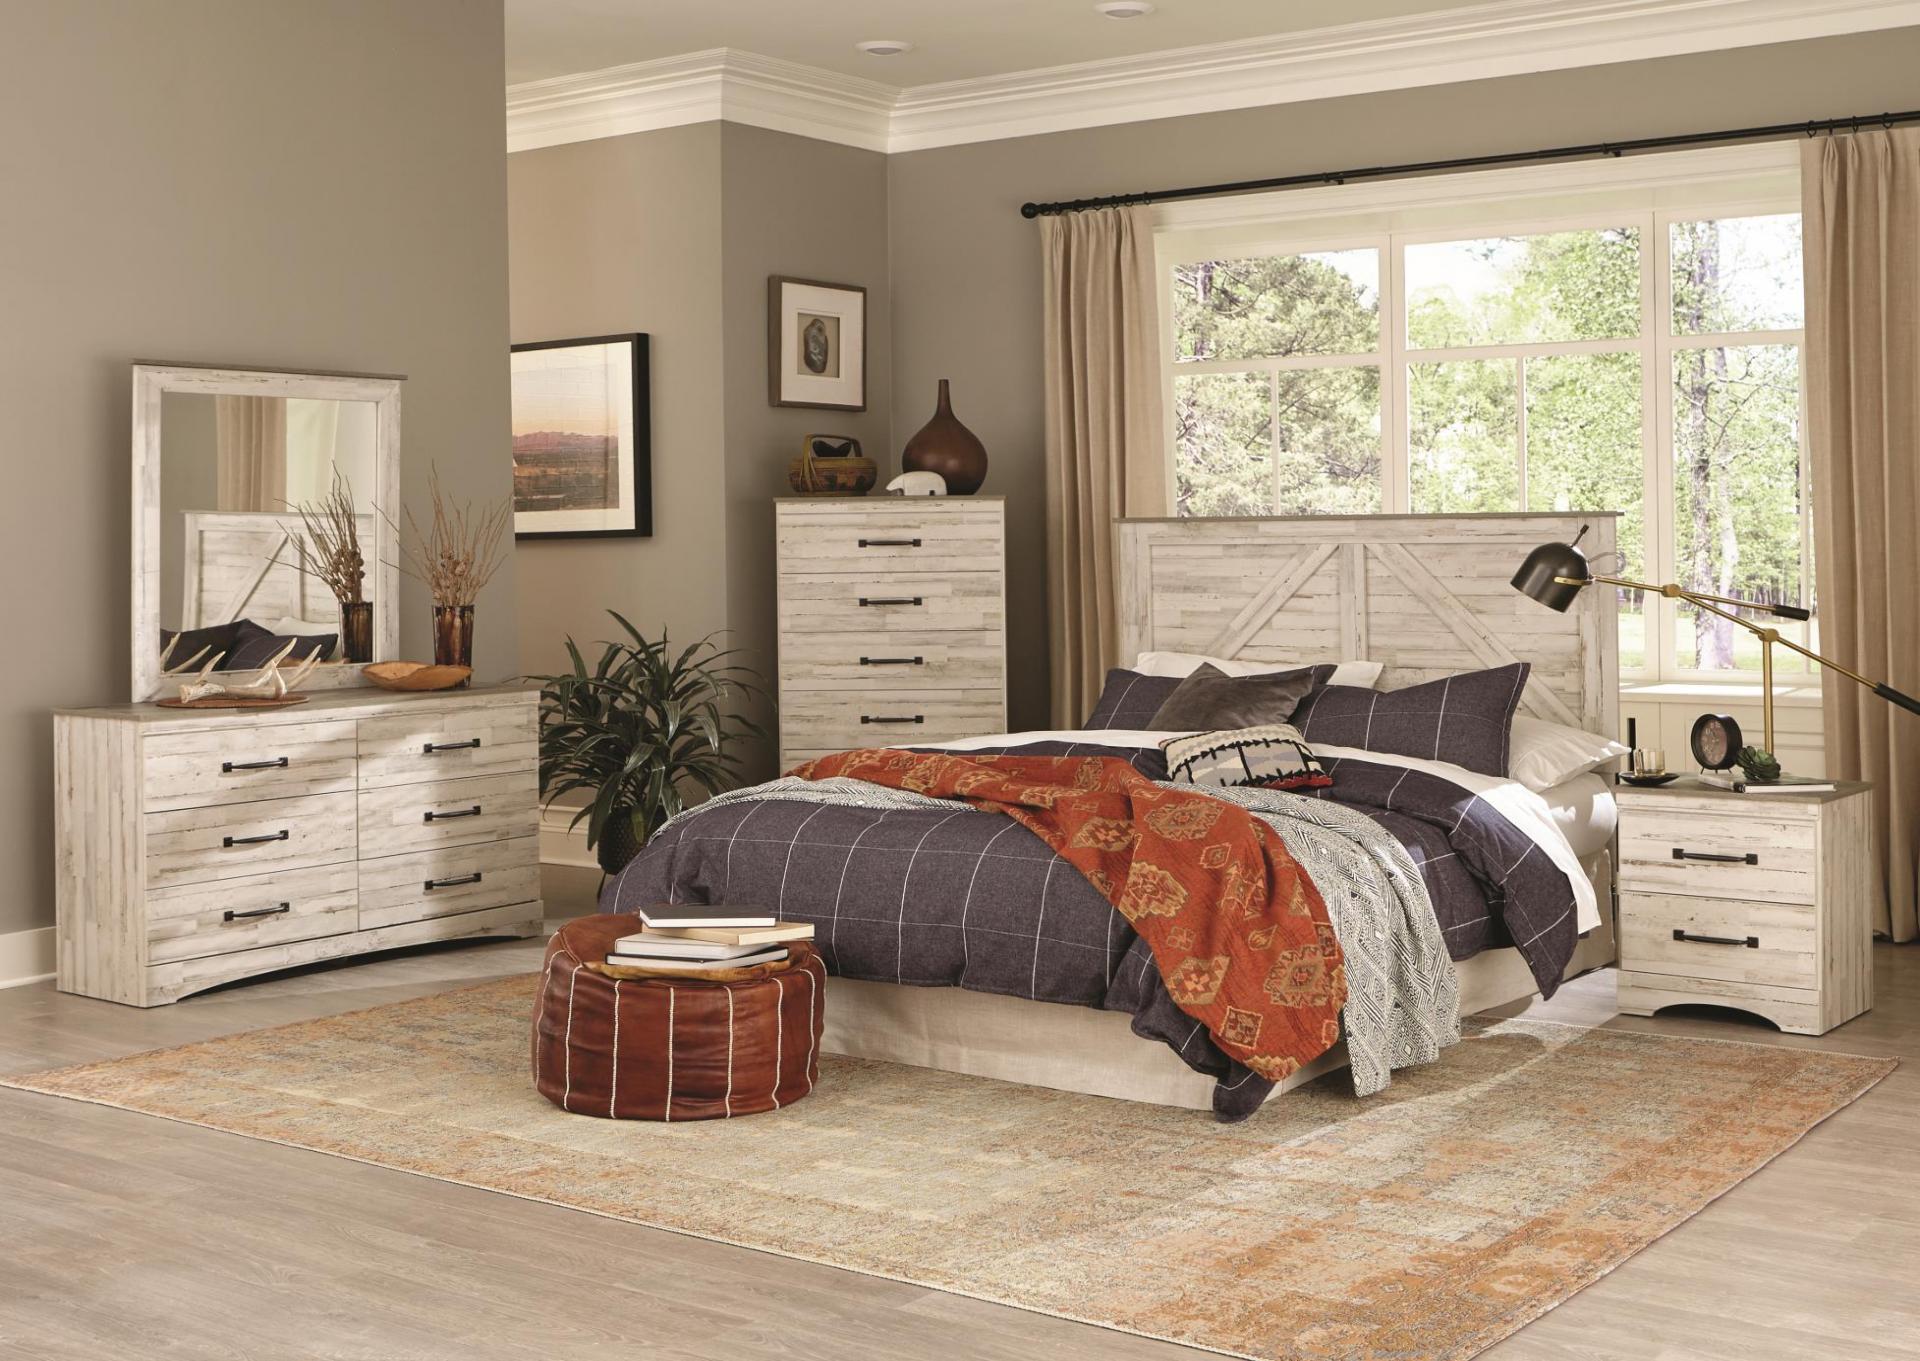 aspen bedroom furniture sale